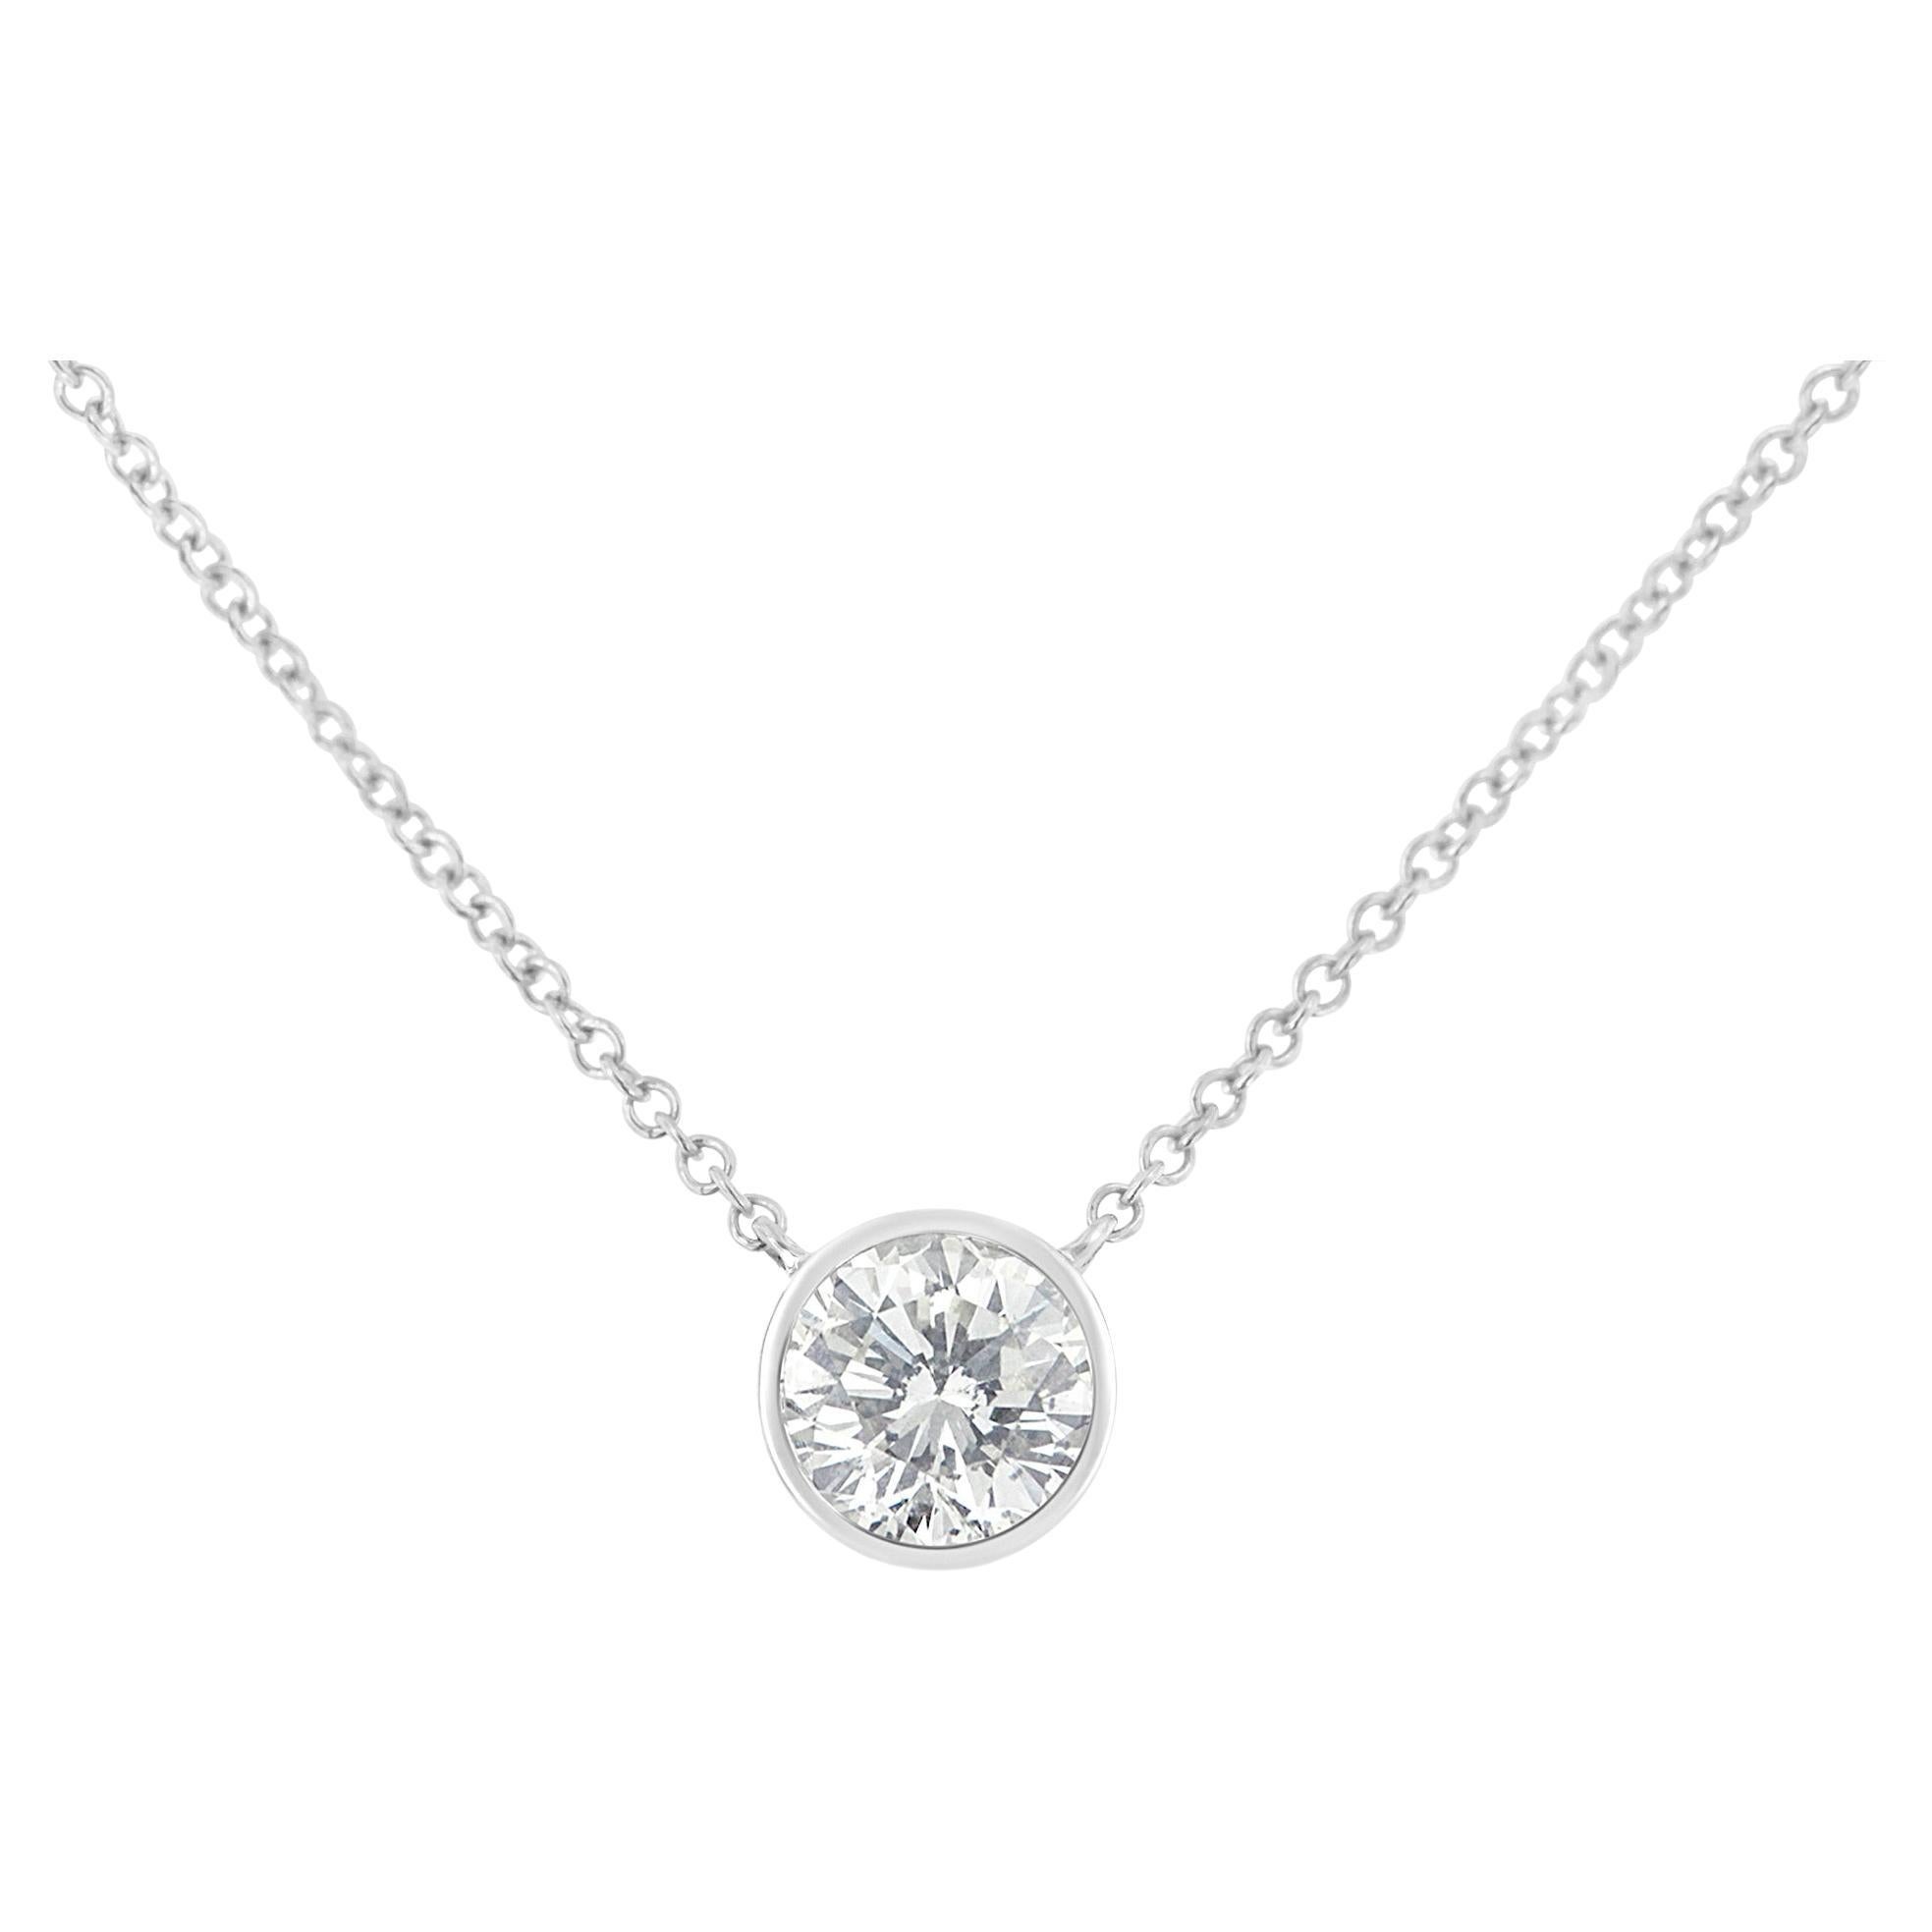 10K White Gold 1/10 Carat Diamond Modern Bezel-Set Solitaire Pendant Necklace